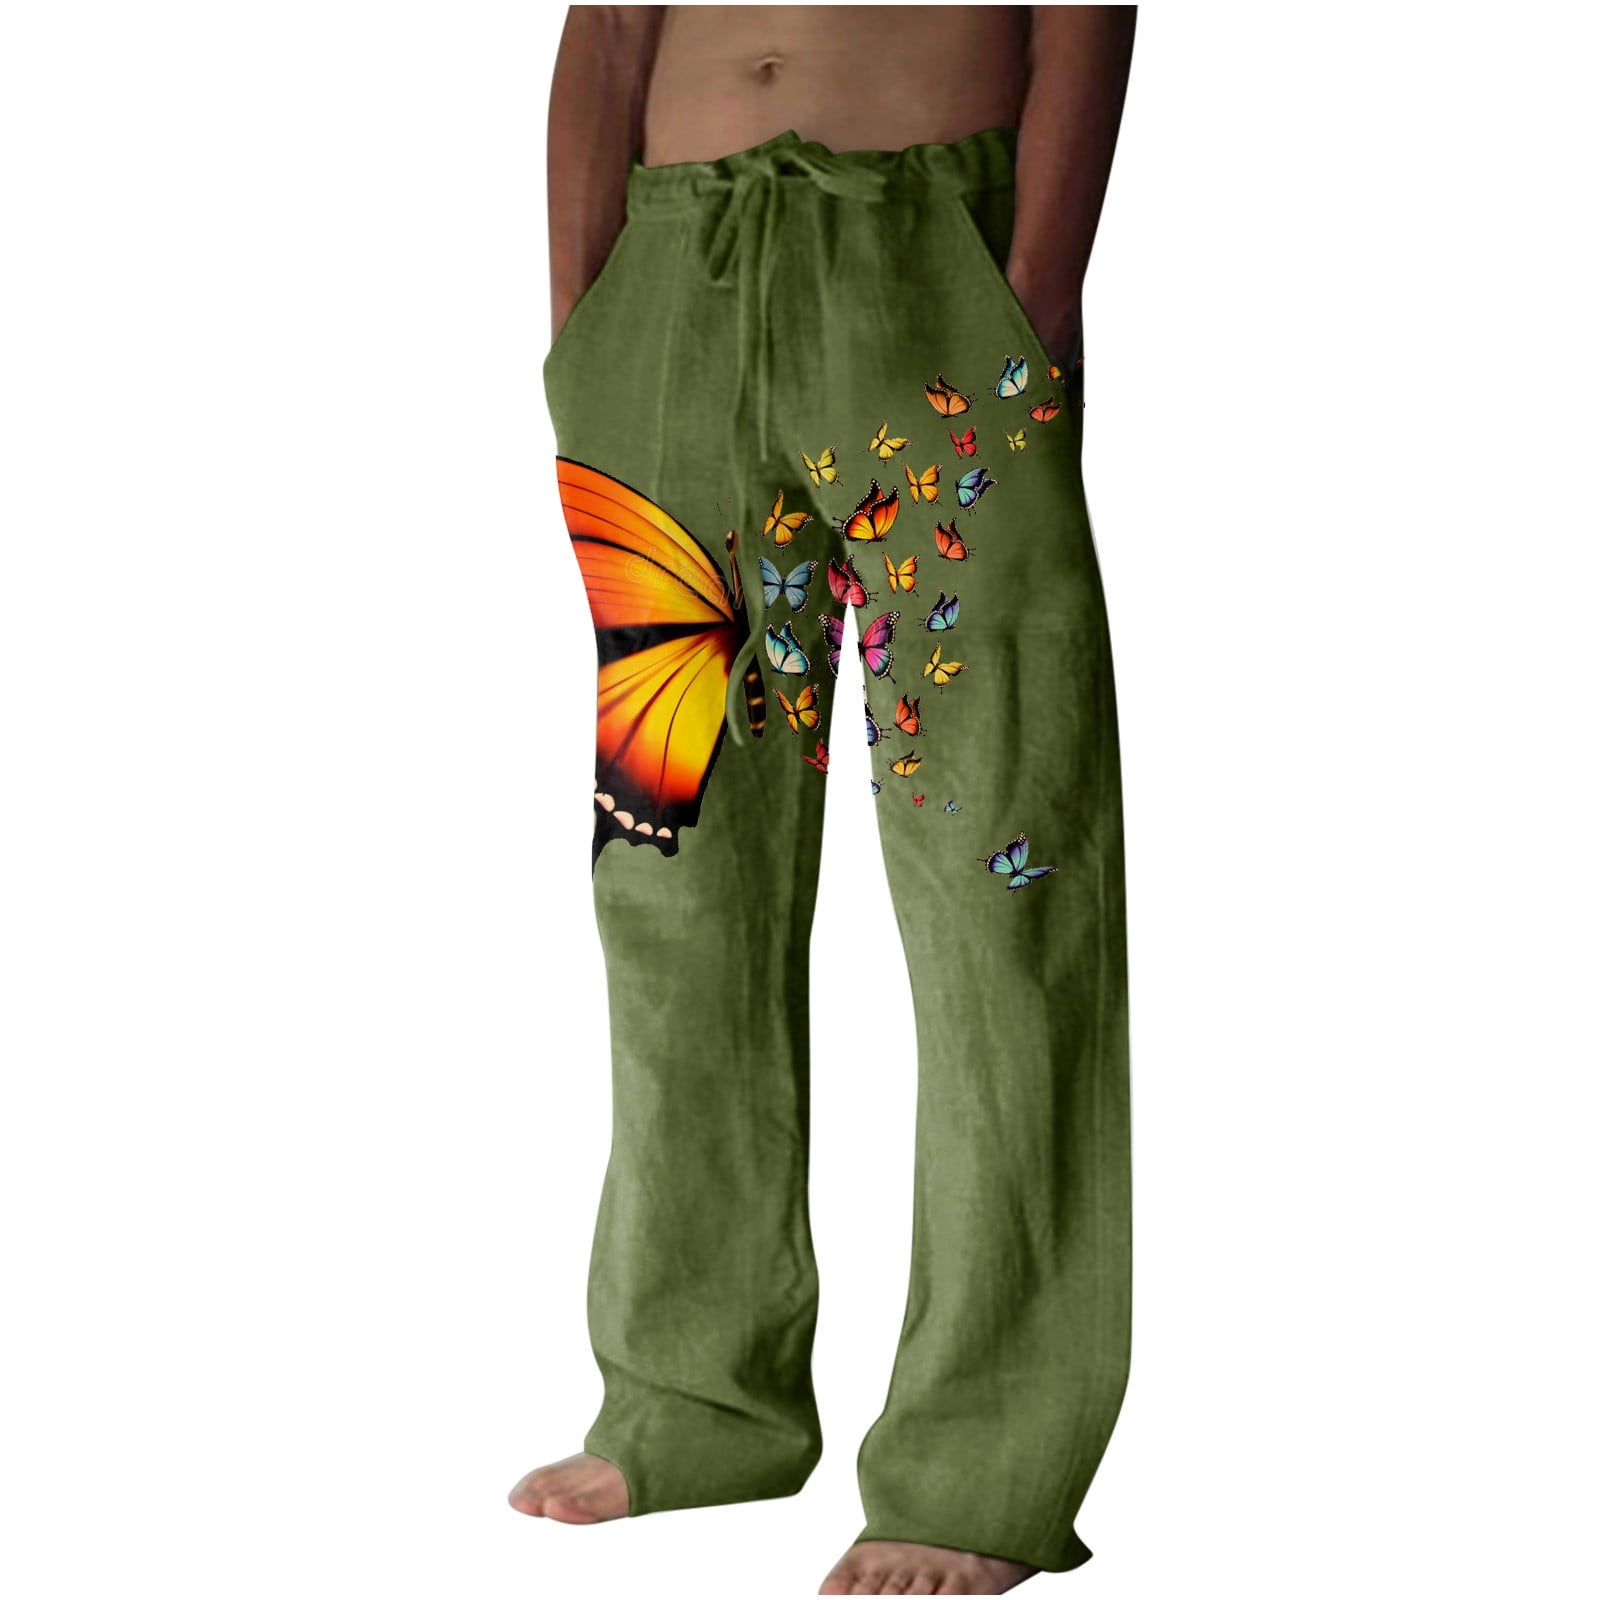 Odeerbi Men's Casual Sweatpants Wide Leg Pants Lace Up Floral Printed Full  Length Pants Green